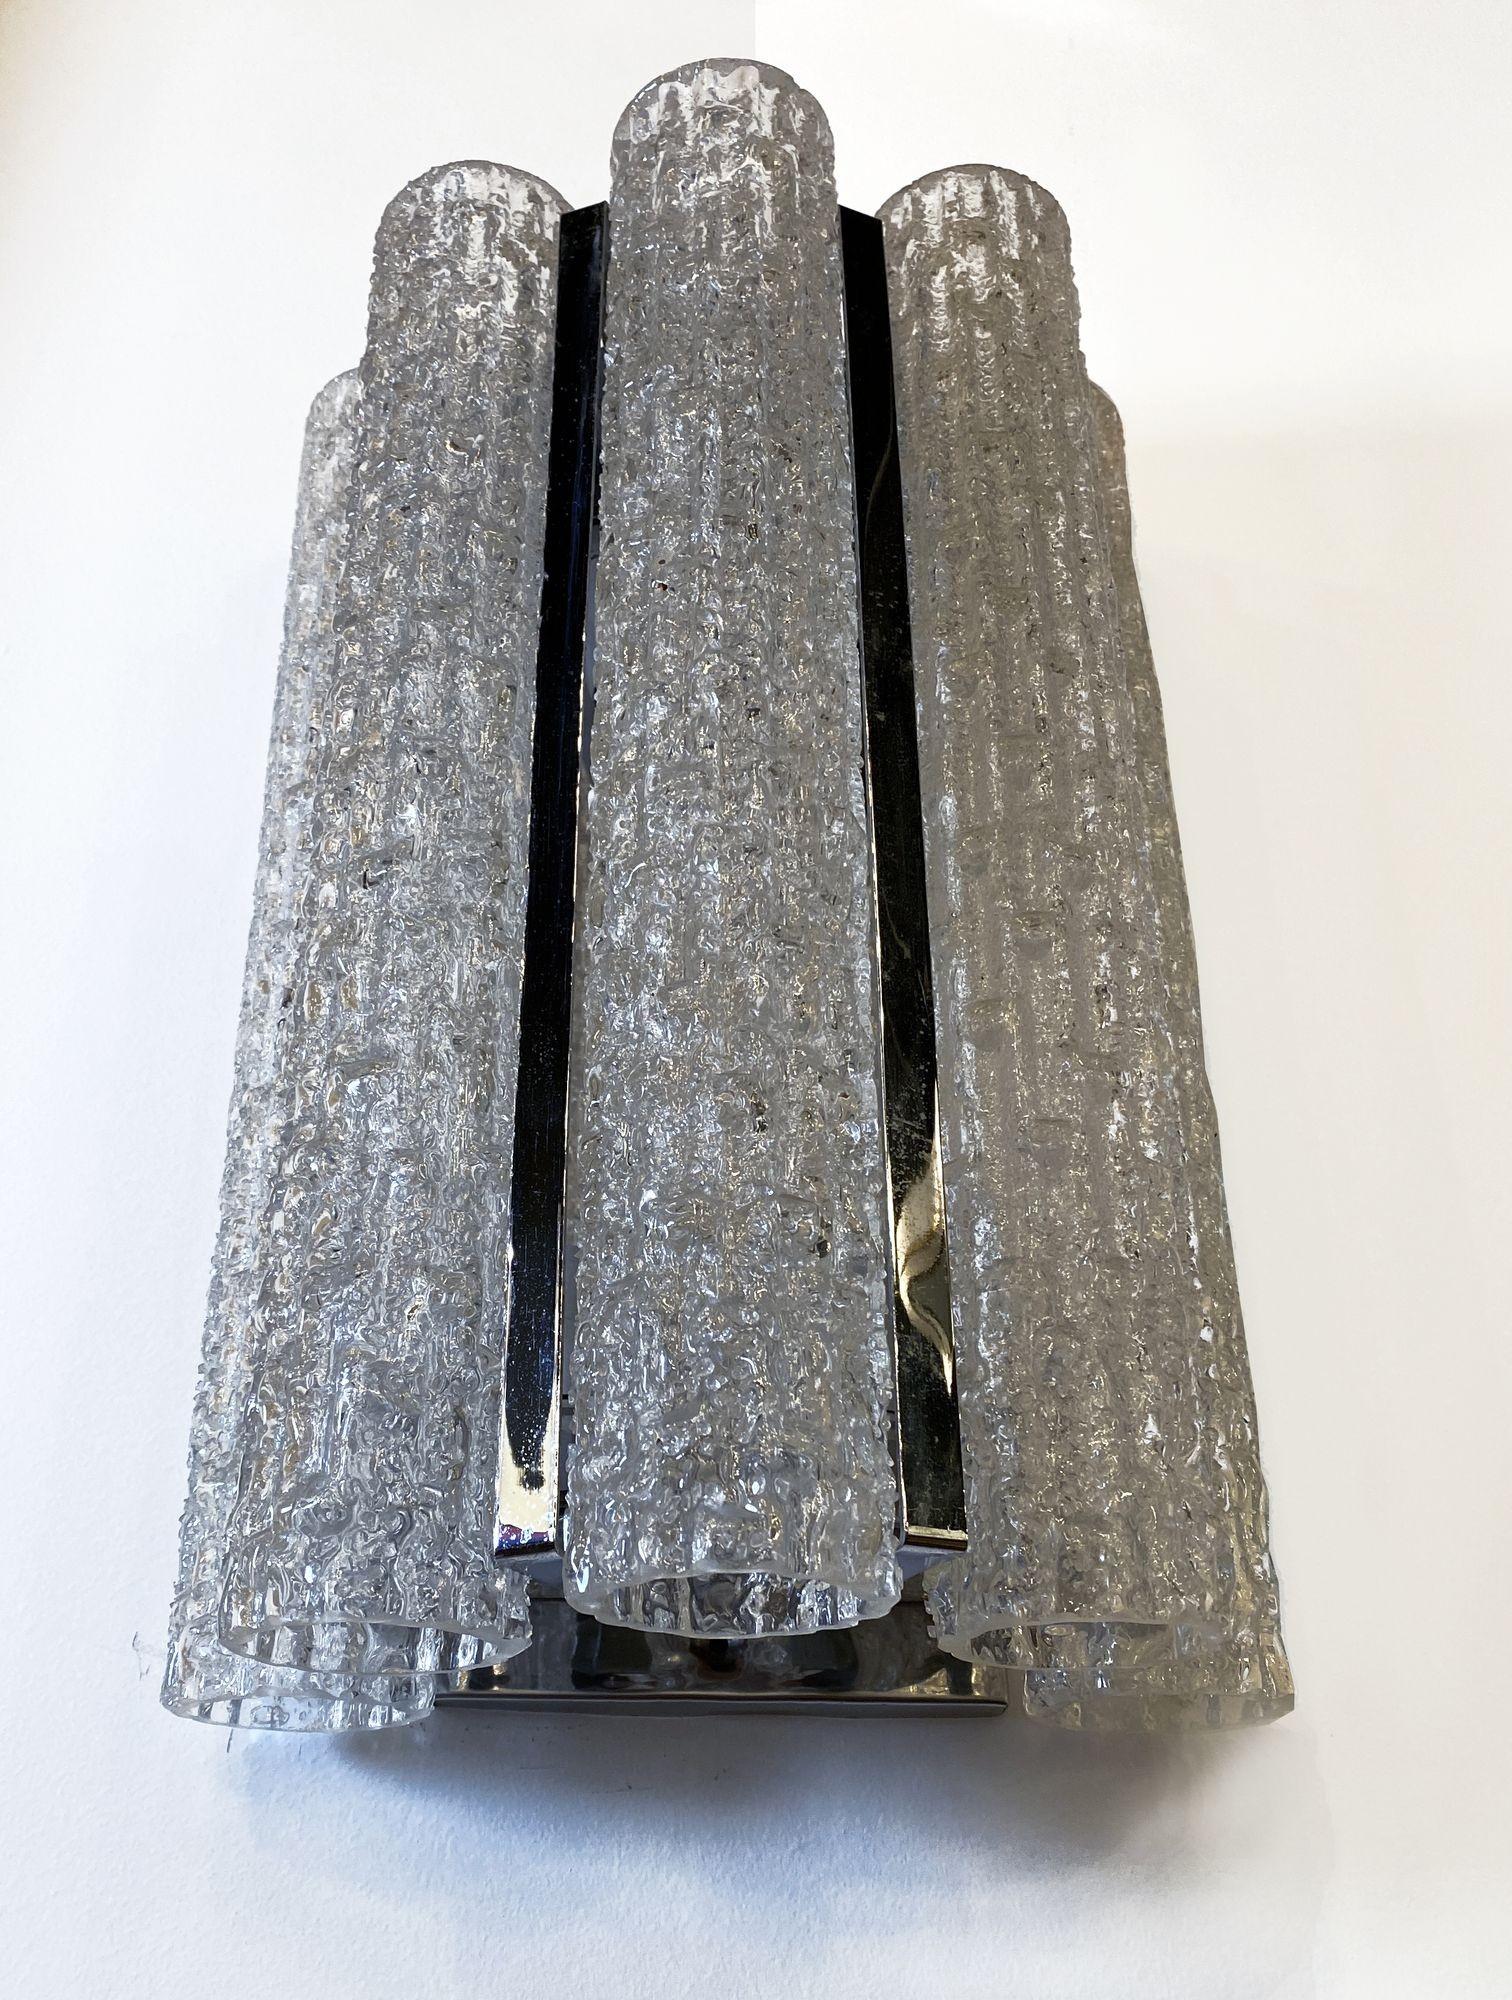 The handblown glass tubes between a chrome semi circular framework.